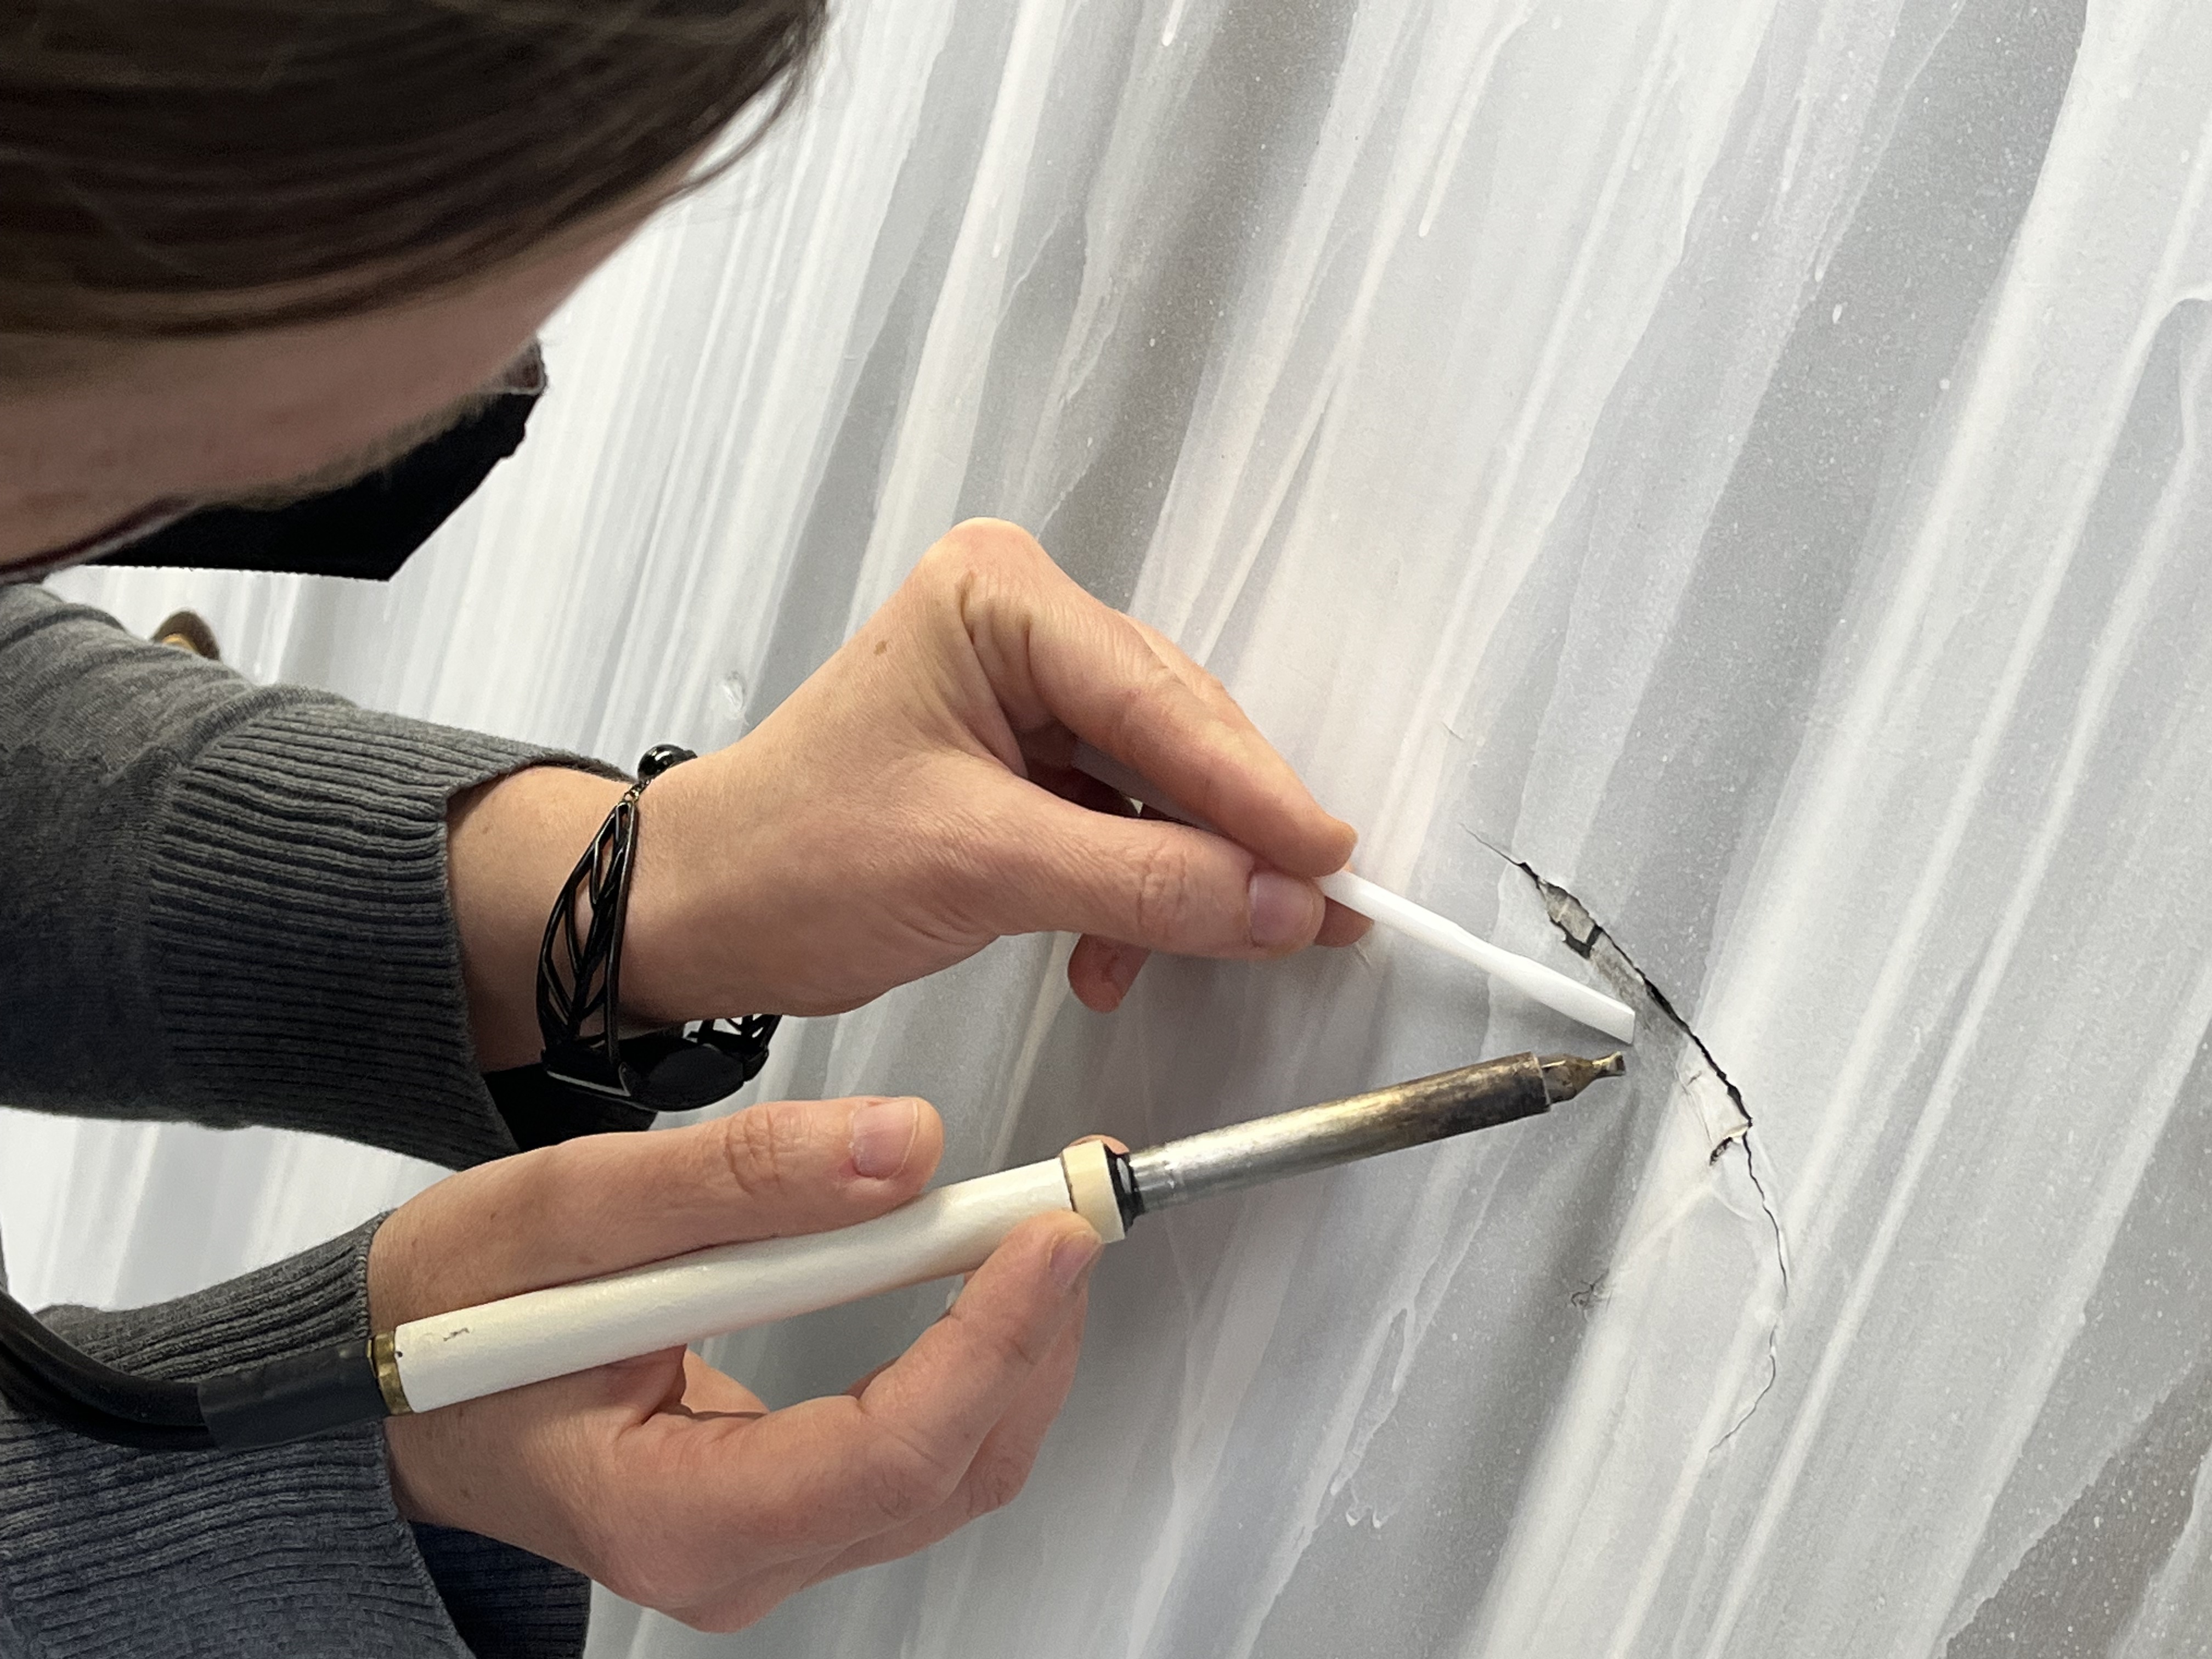 CCAHA Senior Paper Conservator Heather Hendry mending the iconic Waterfall mural of artist Hiroshi Senju from Philadelphia’s Shofuso Japanese Cultural Center